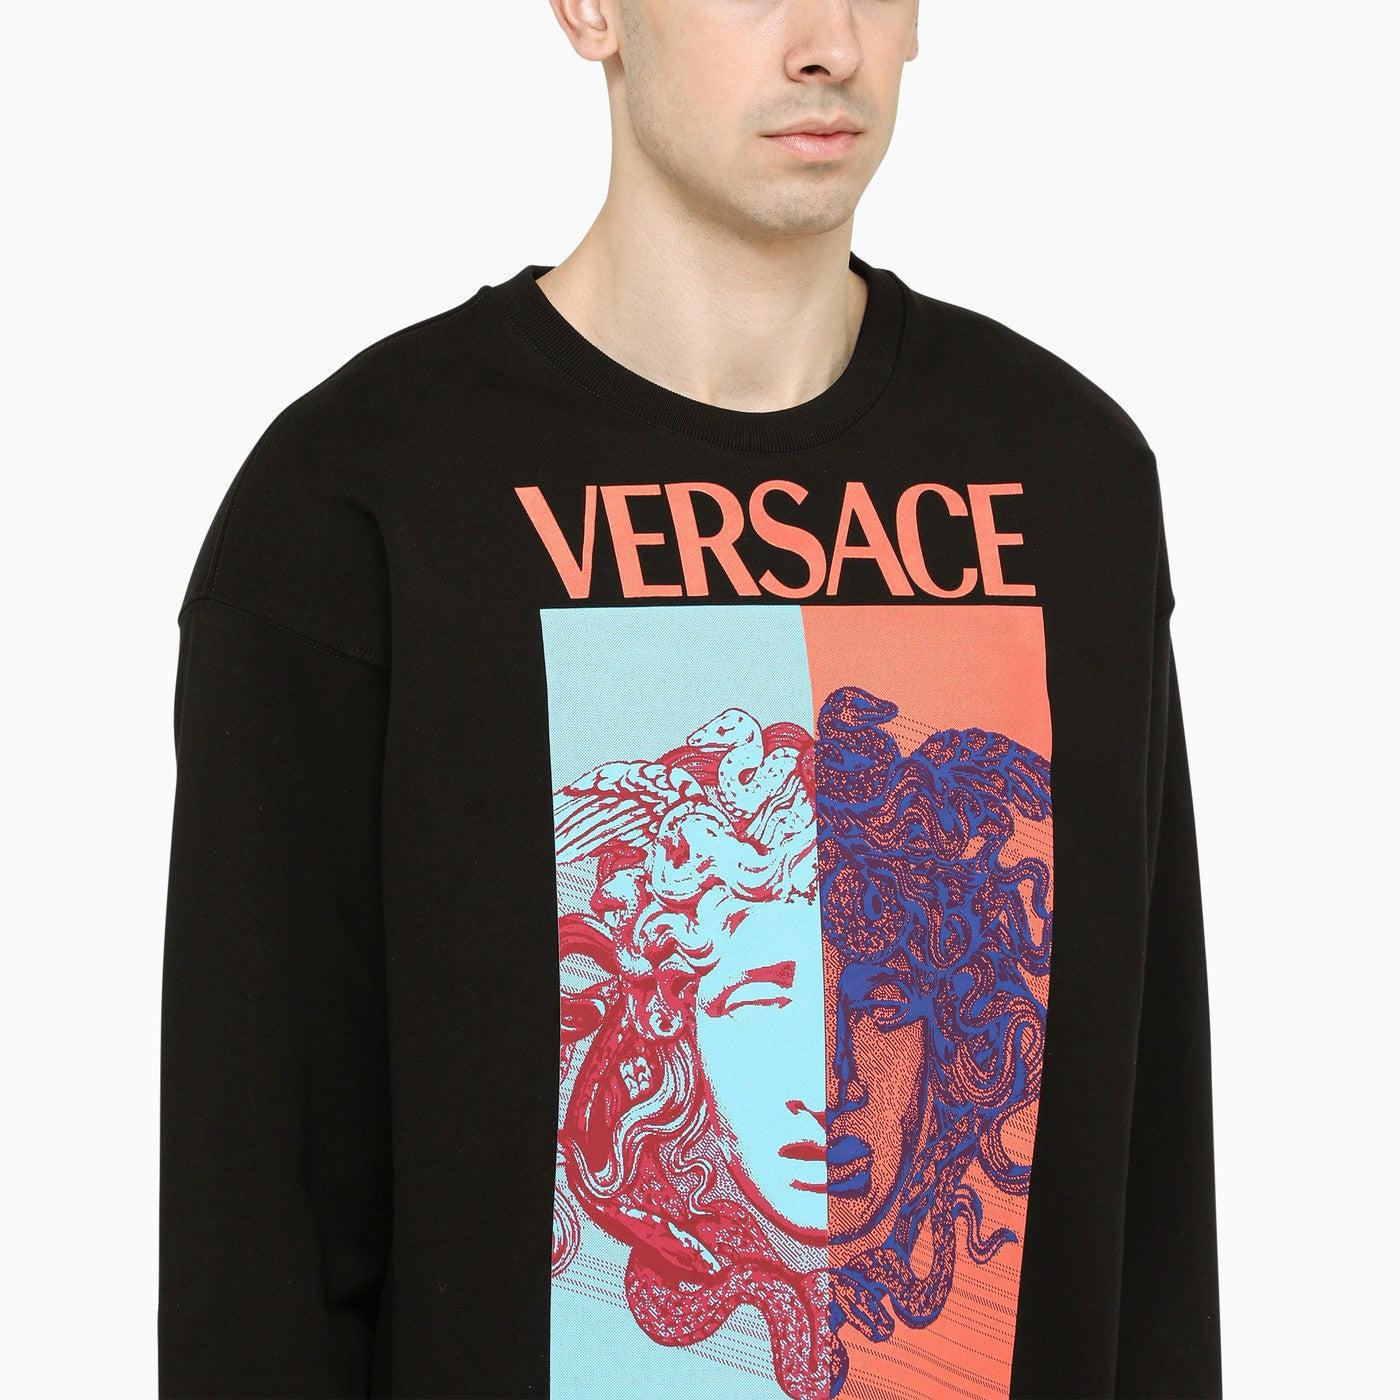 Versace Medusa Print T-Shirt - Black